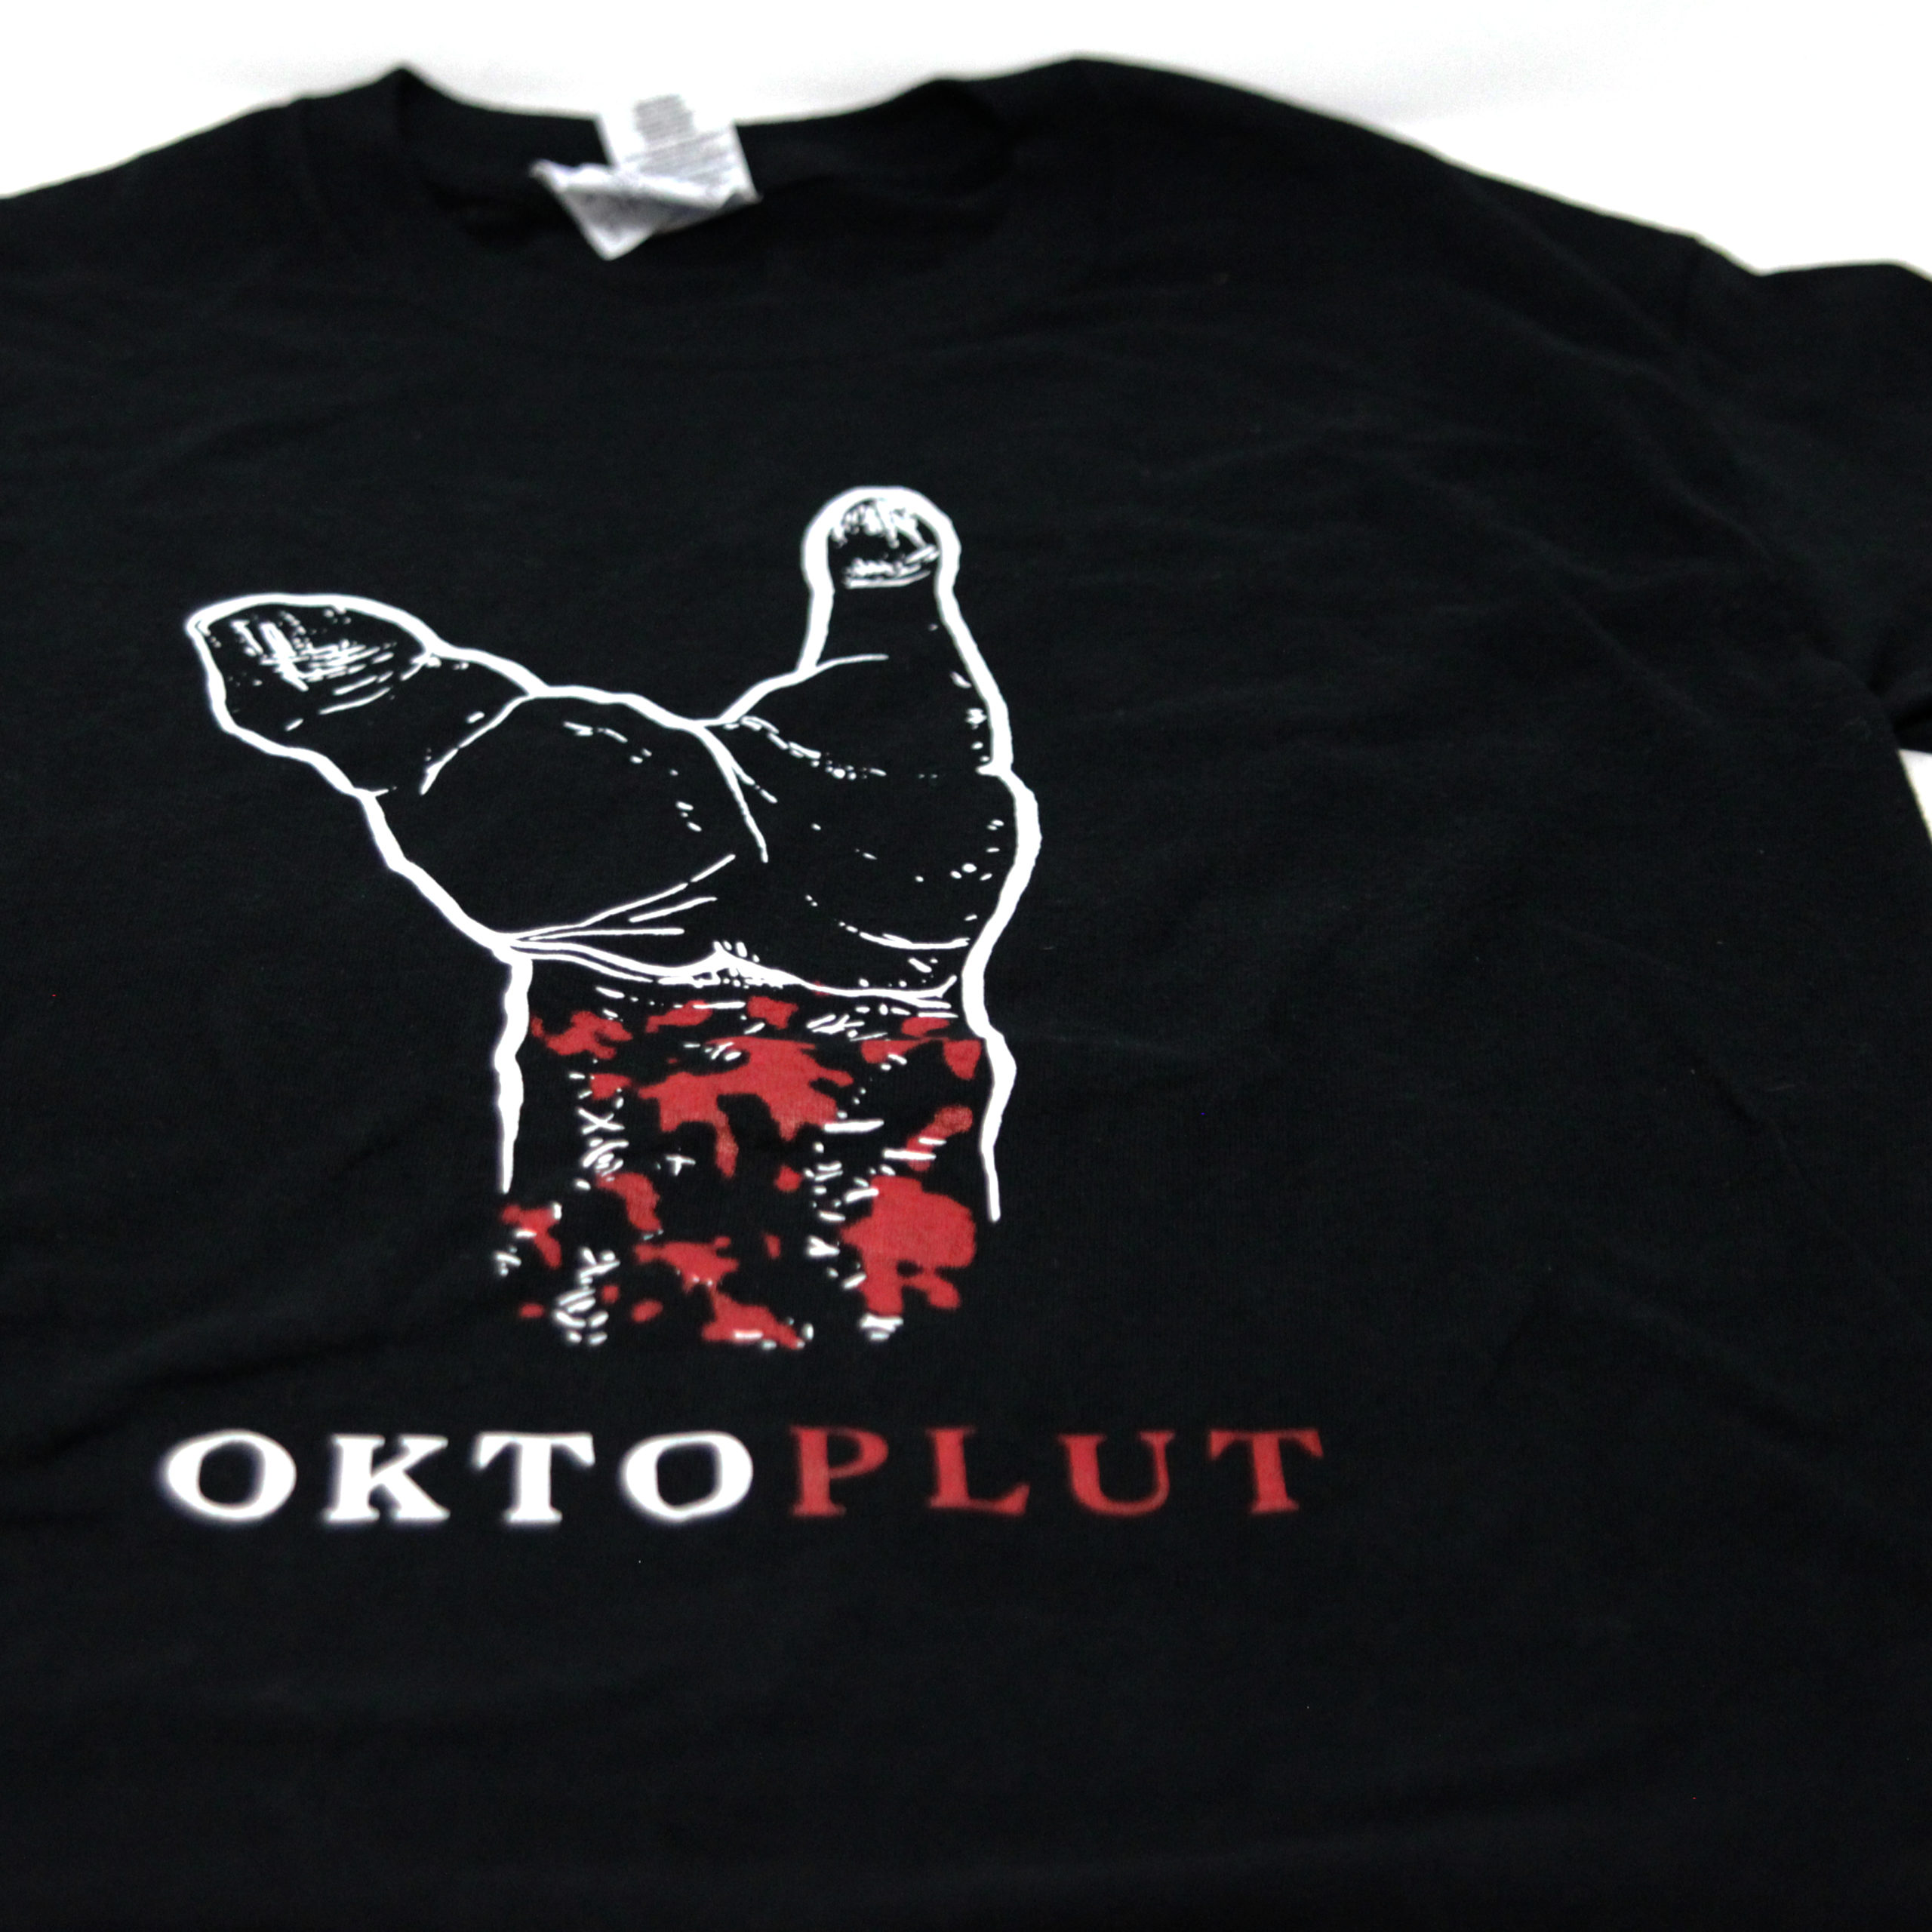 T-shirt « Oktomain » – Oktoplut